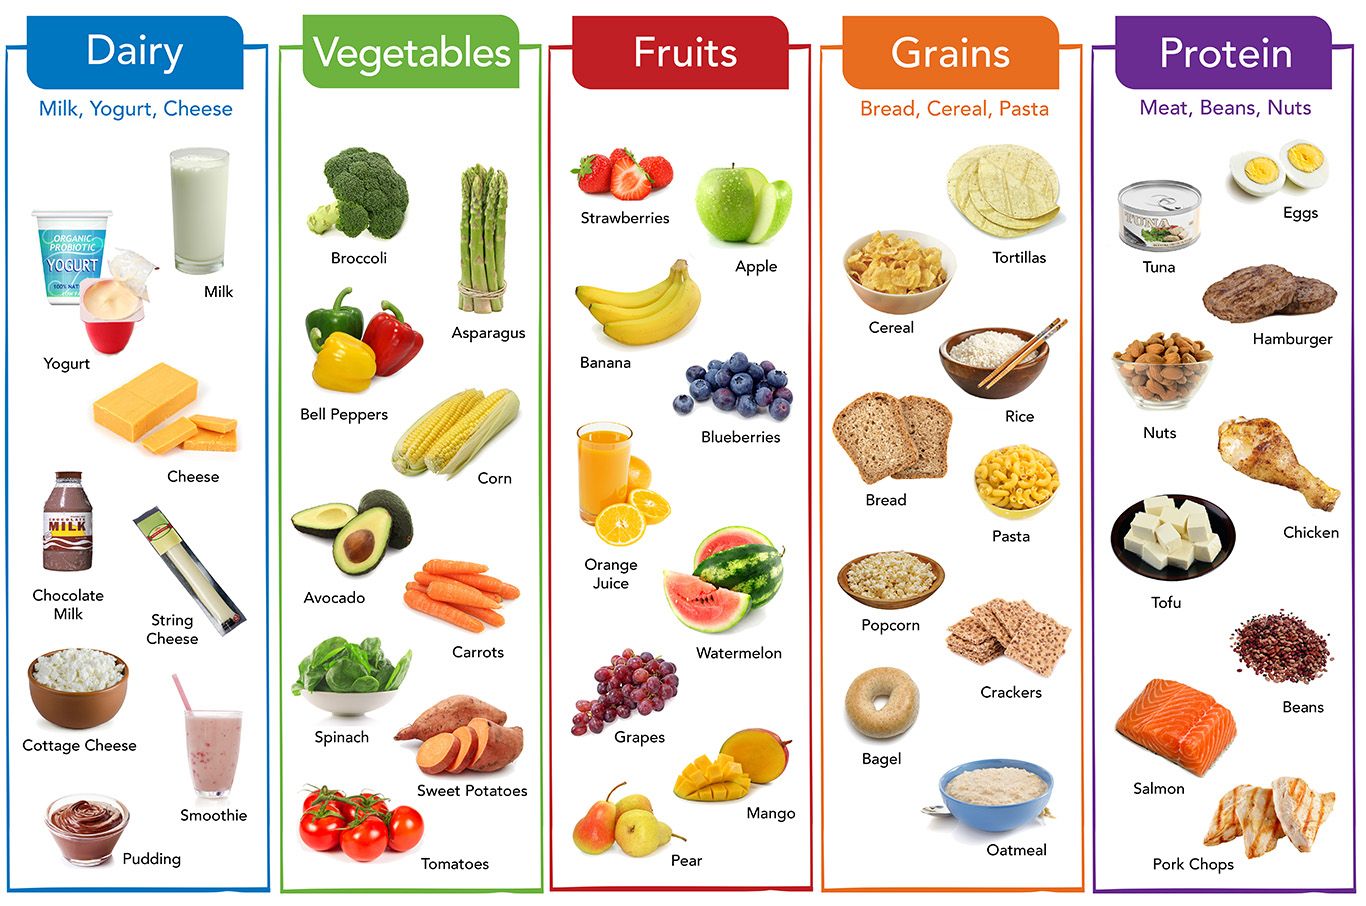 Common Food Categories